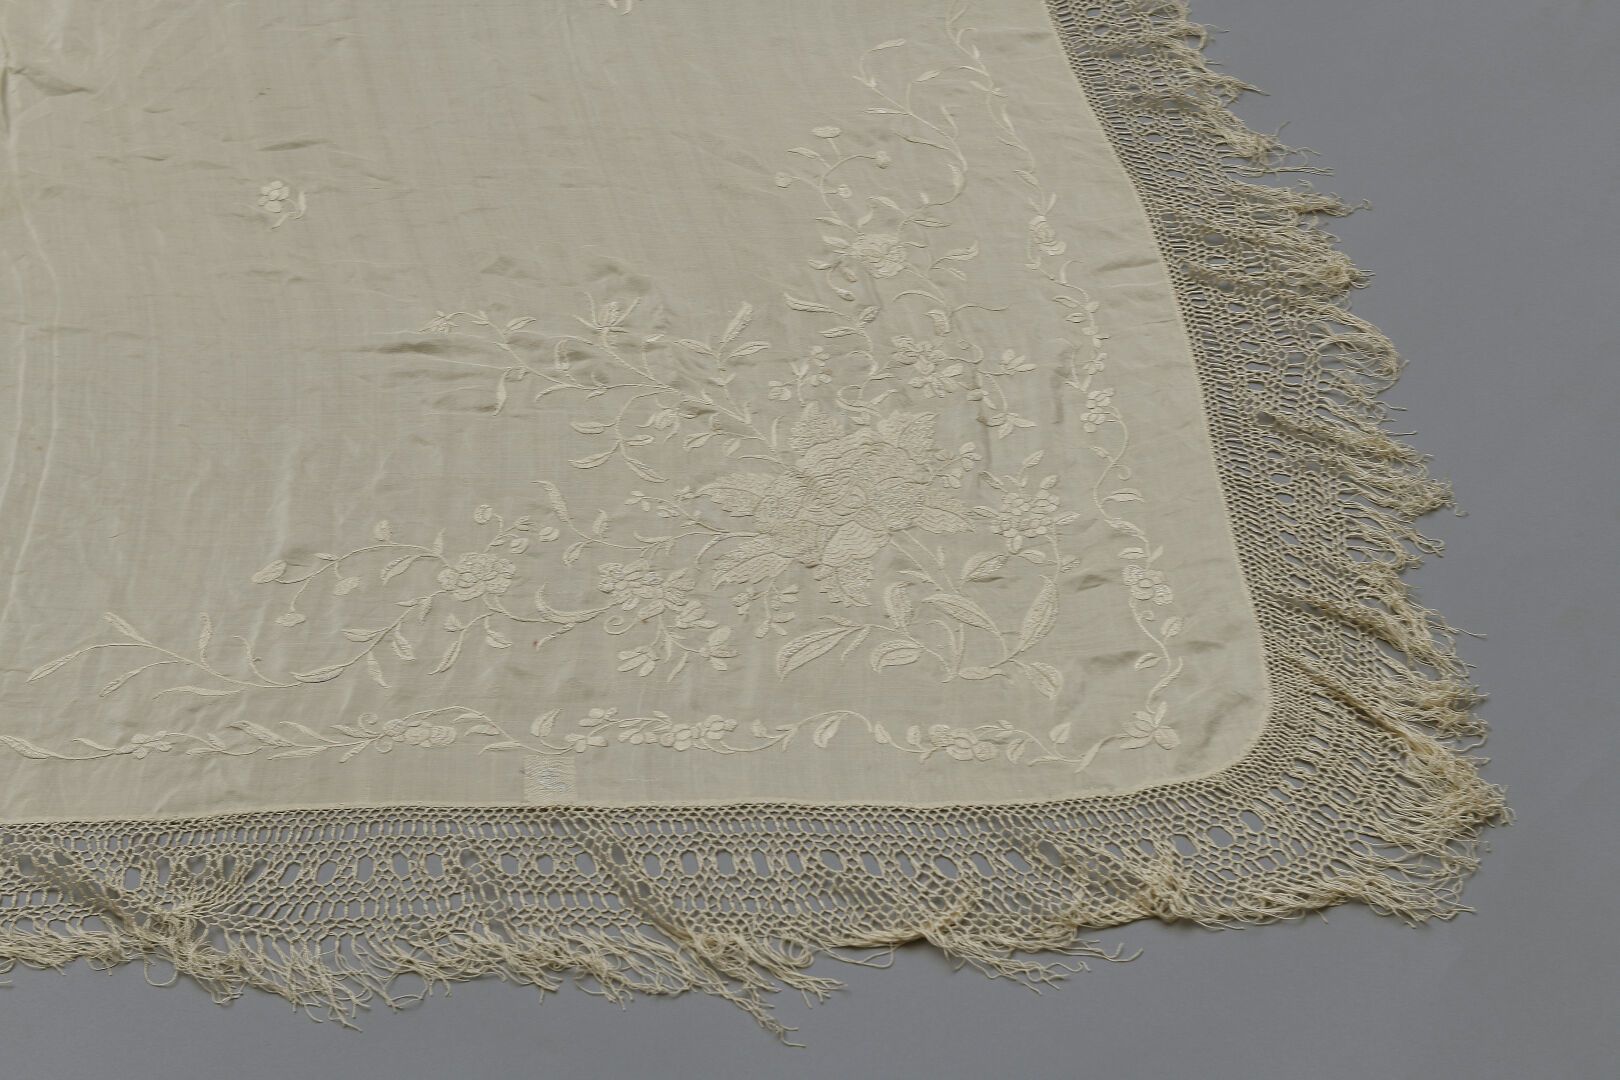 Null 两件广州丝织品披肩，用丝线绣成。
中国，20世纪初
花卉图案。状况良好。
155 x 160厘米和70 x 70厘米